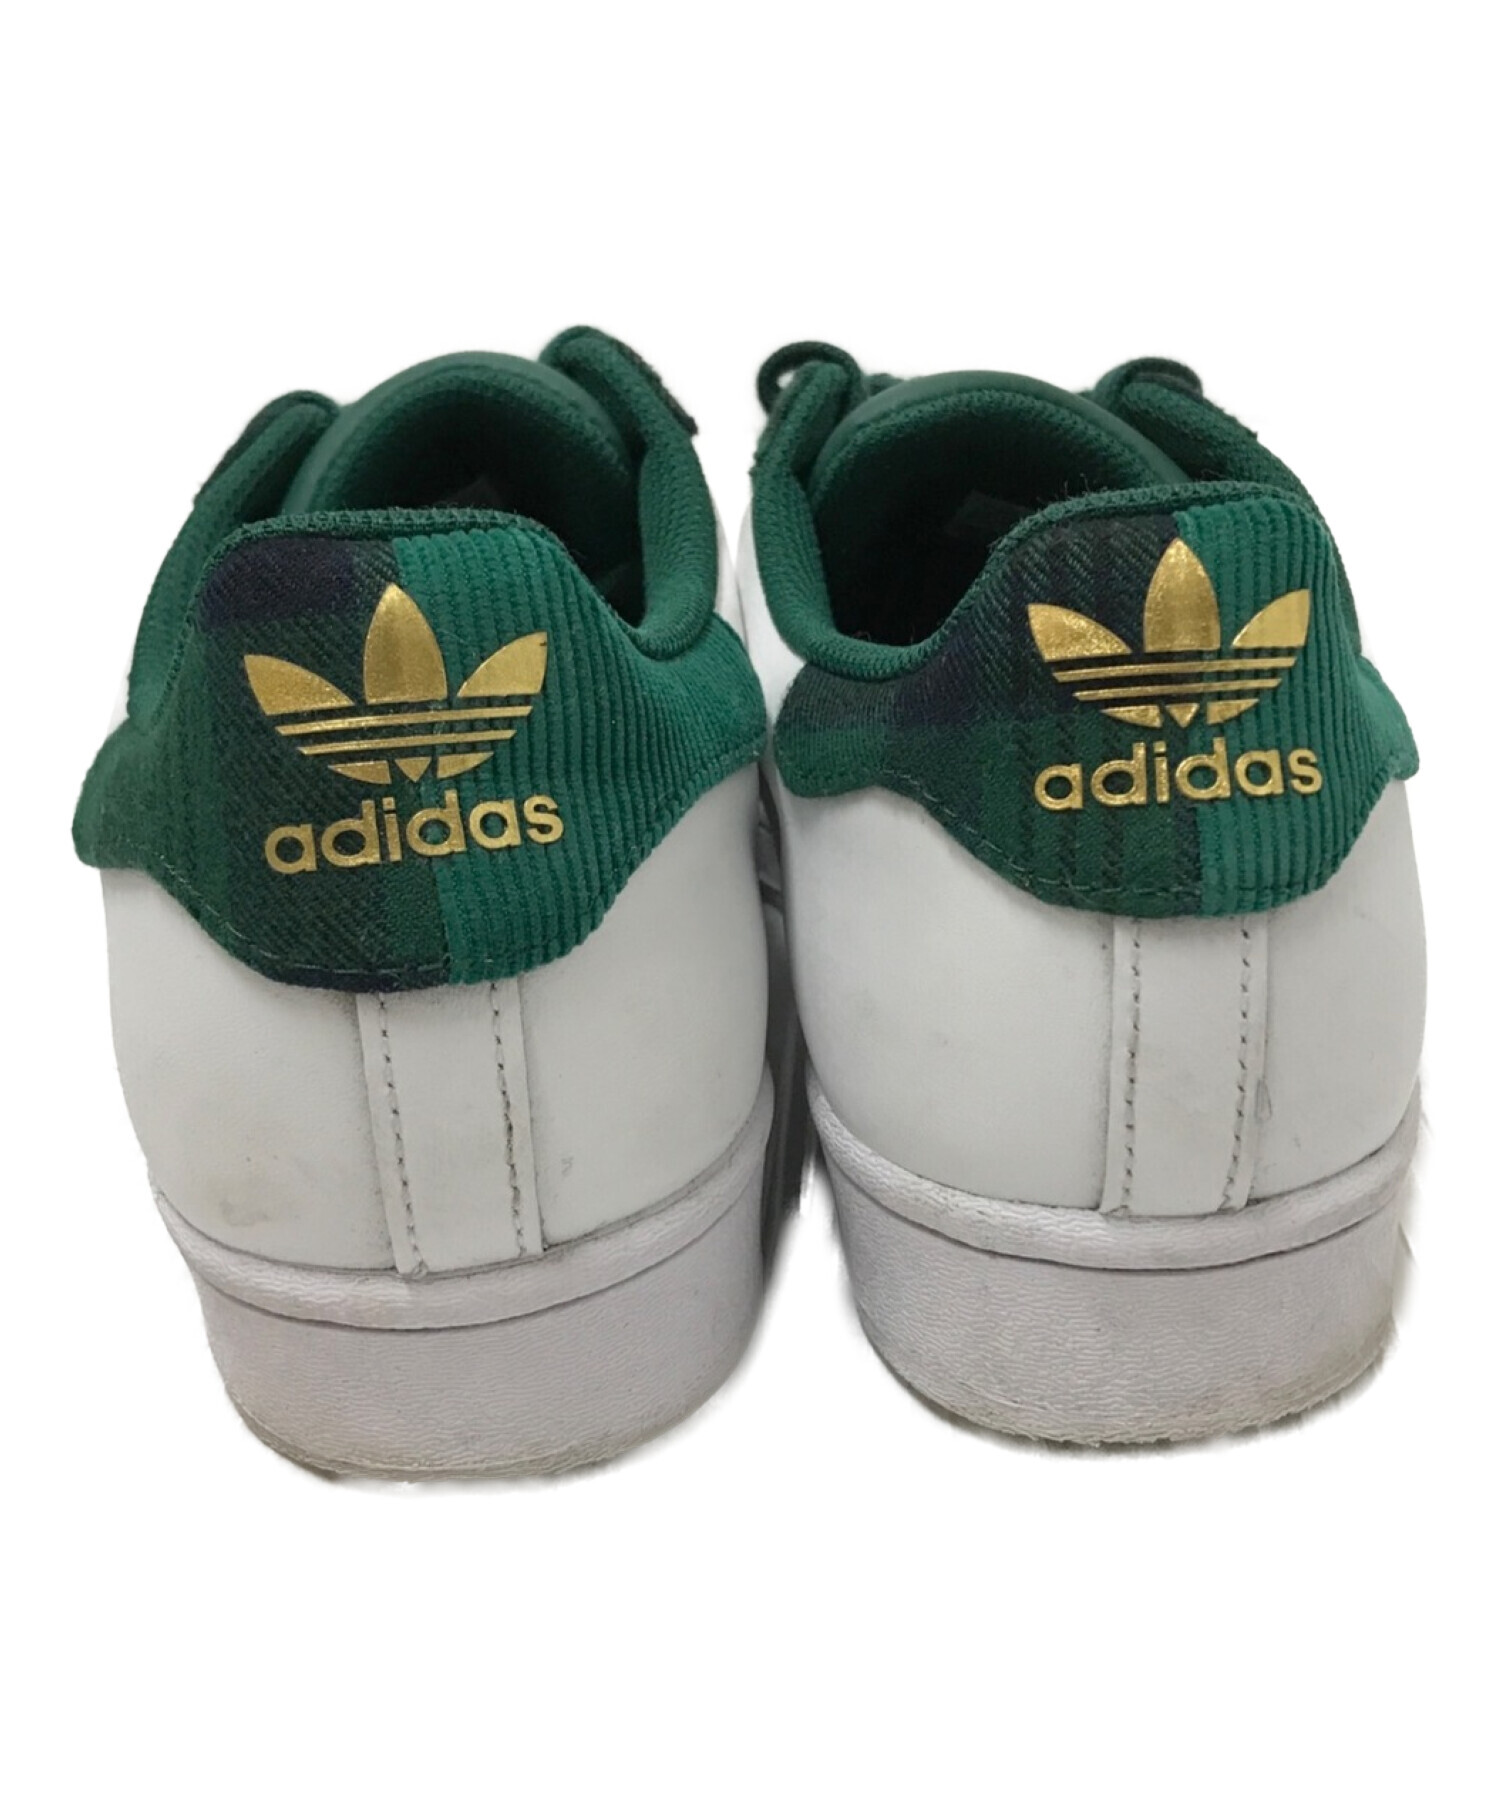 adidas (アディダス) スーパースター ホワイト×グリーン サイズ:25.5cm